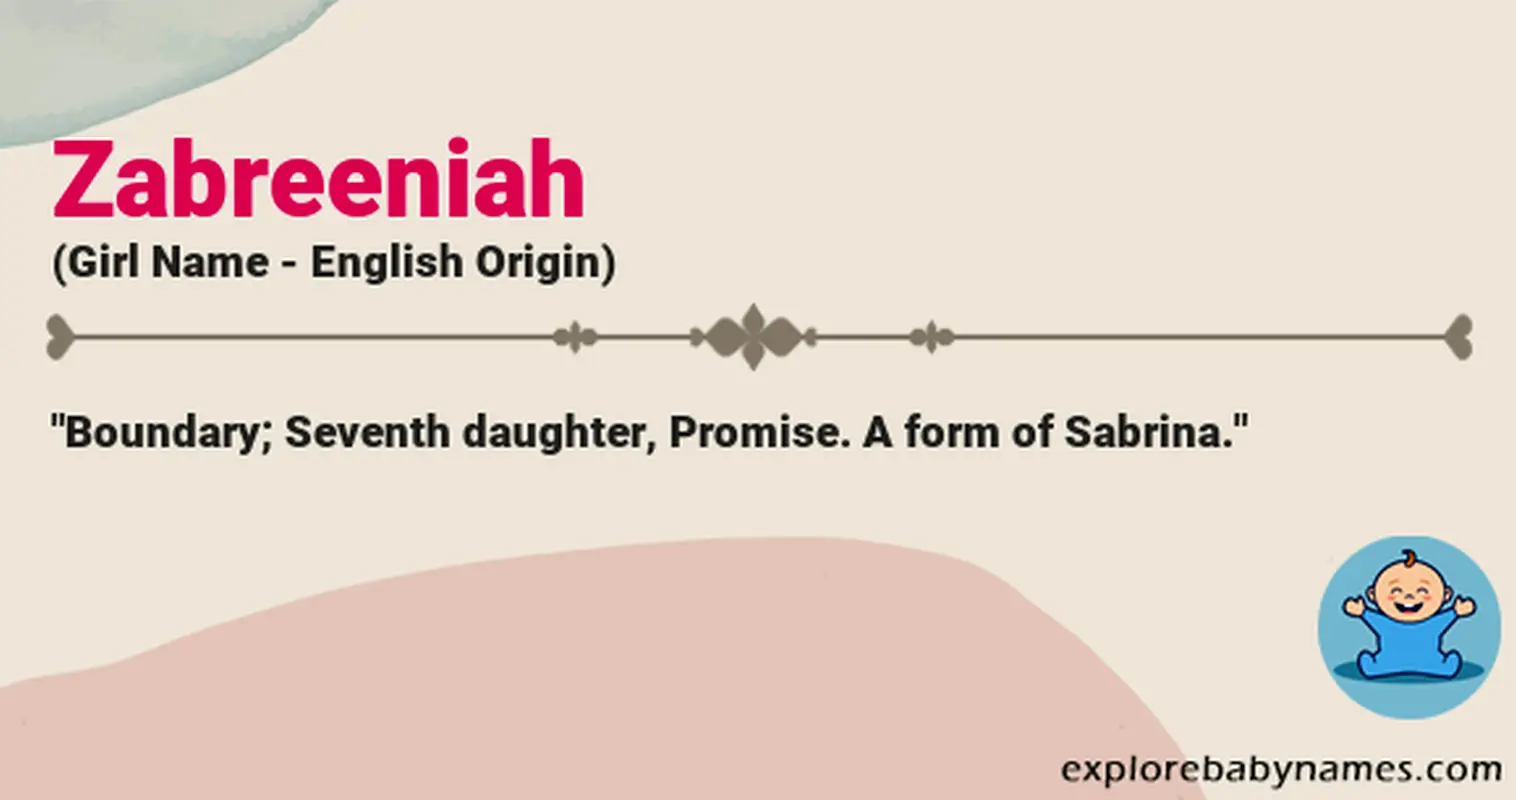 Meaning of Zabreeniah